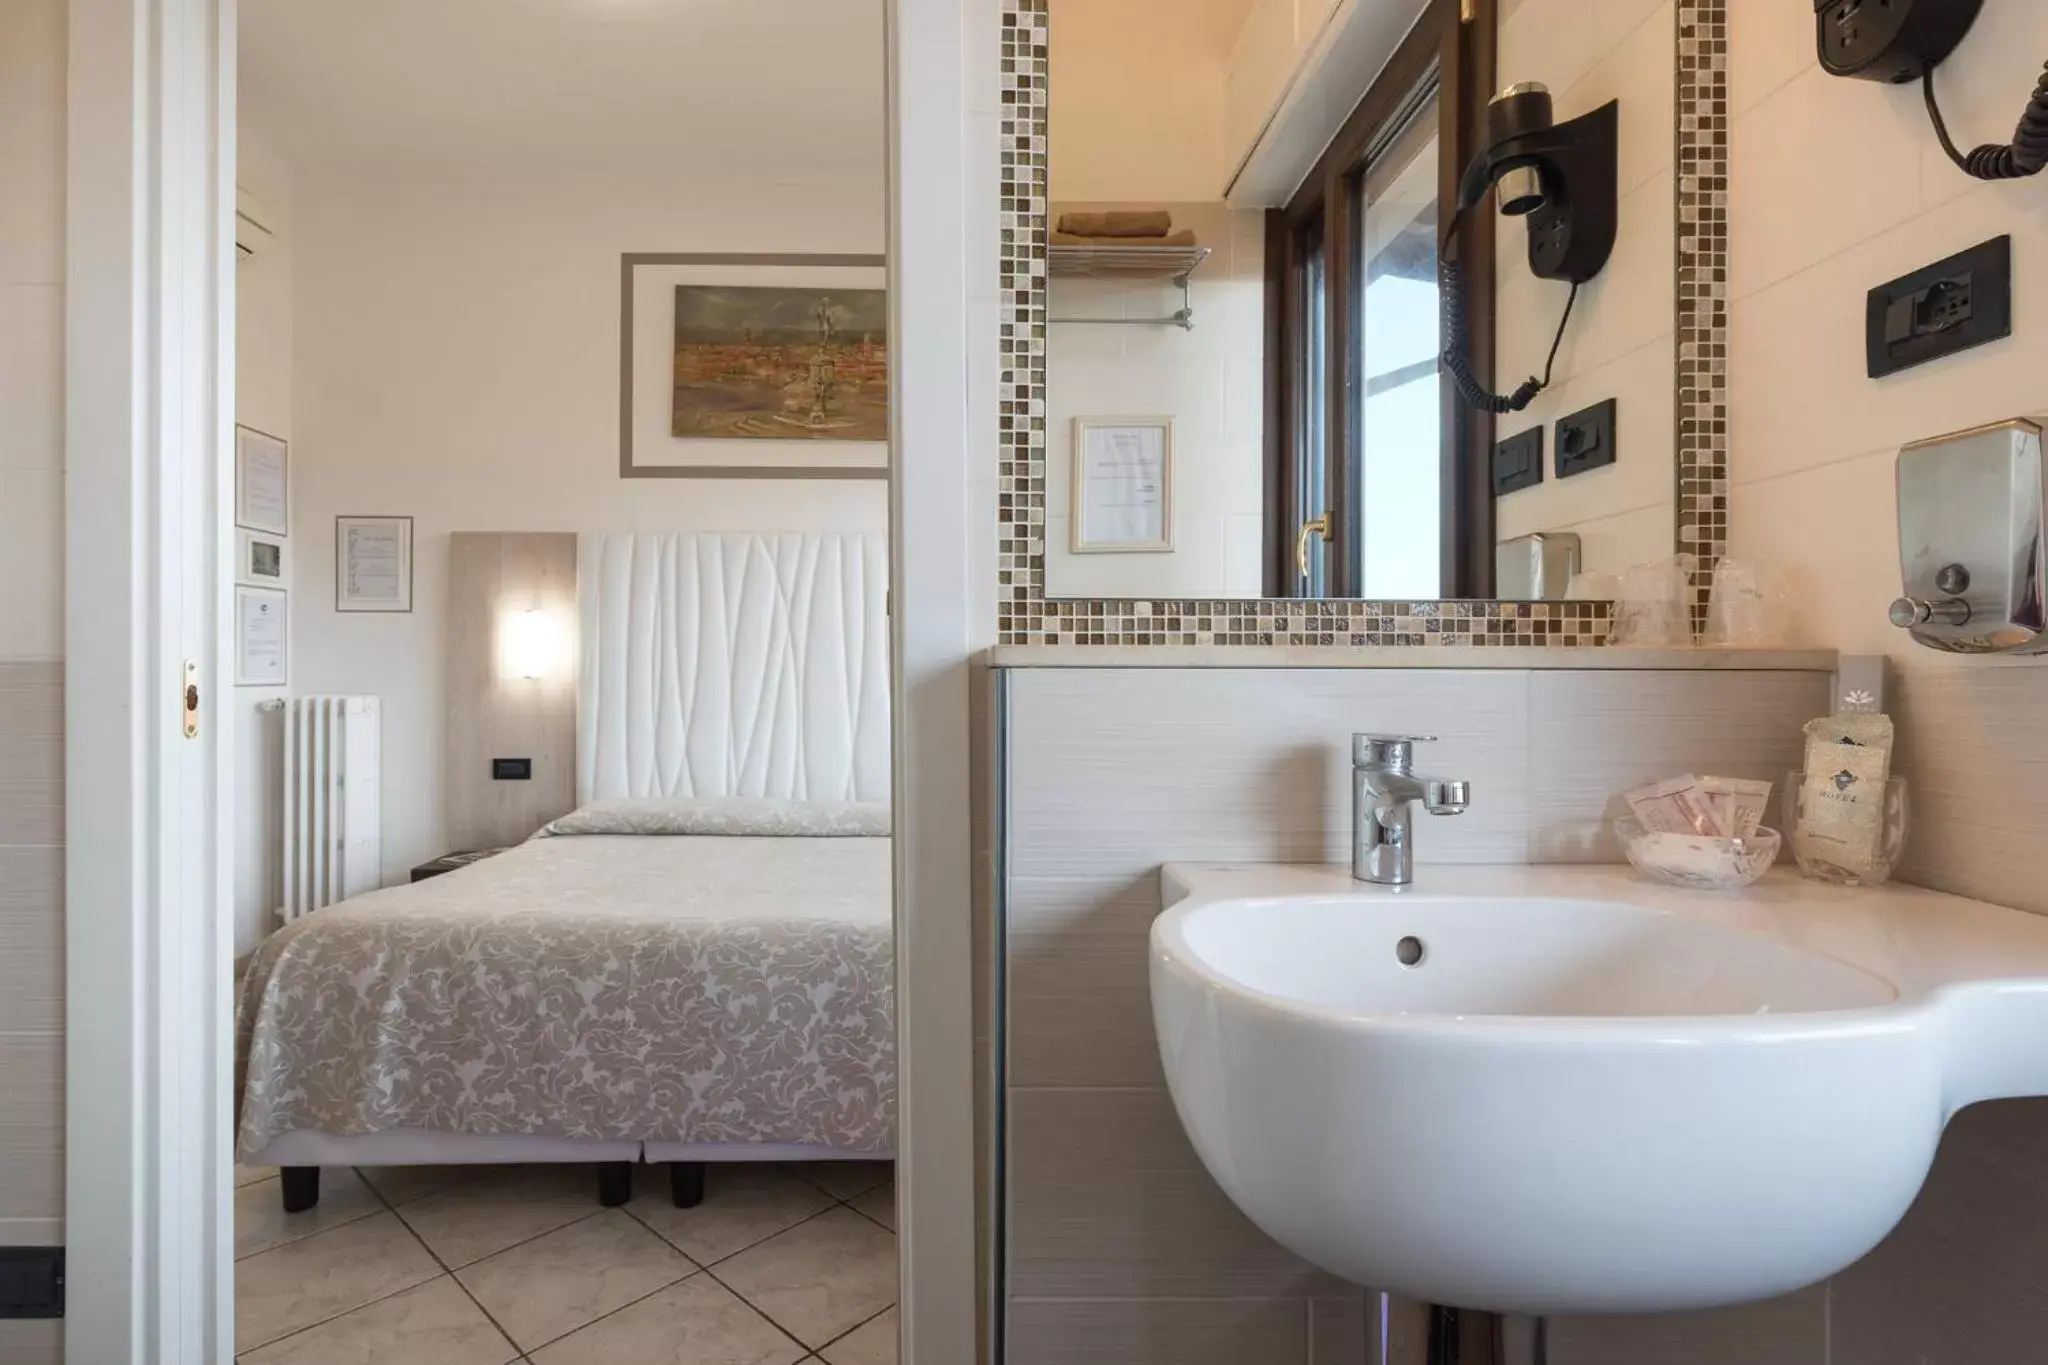 Photo of the whole room, Bathroom in Hotel Bellavista